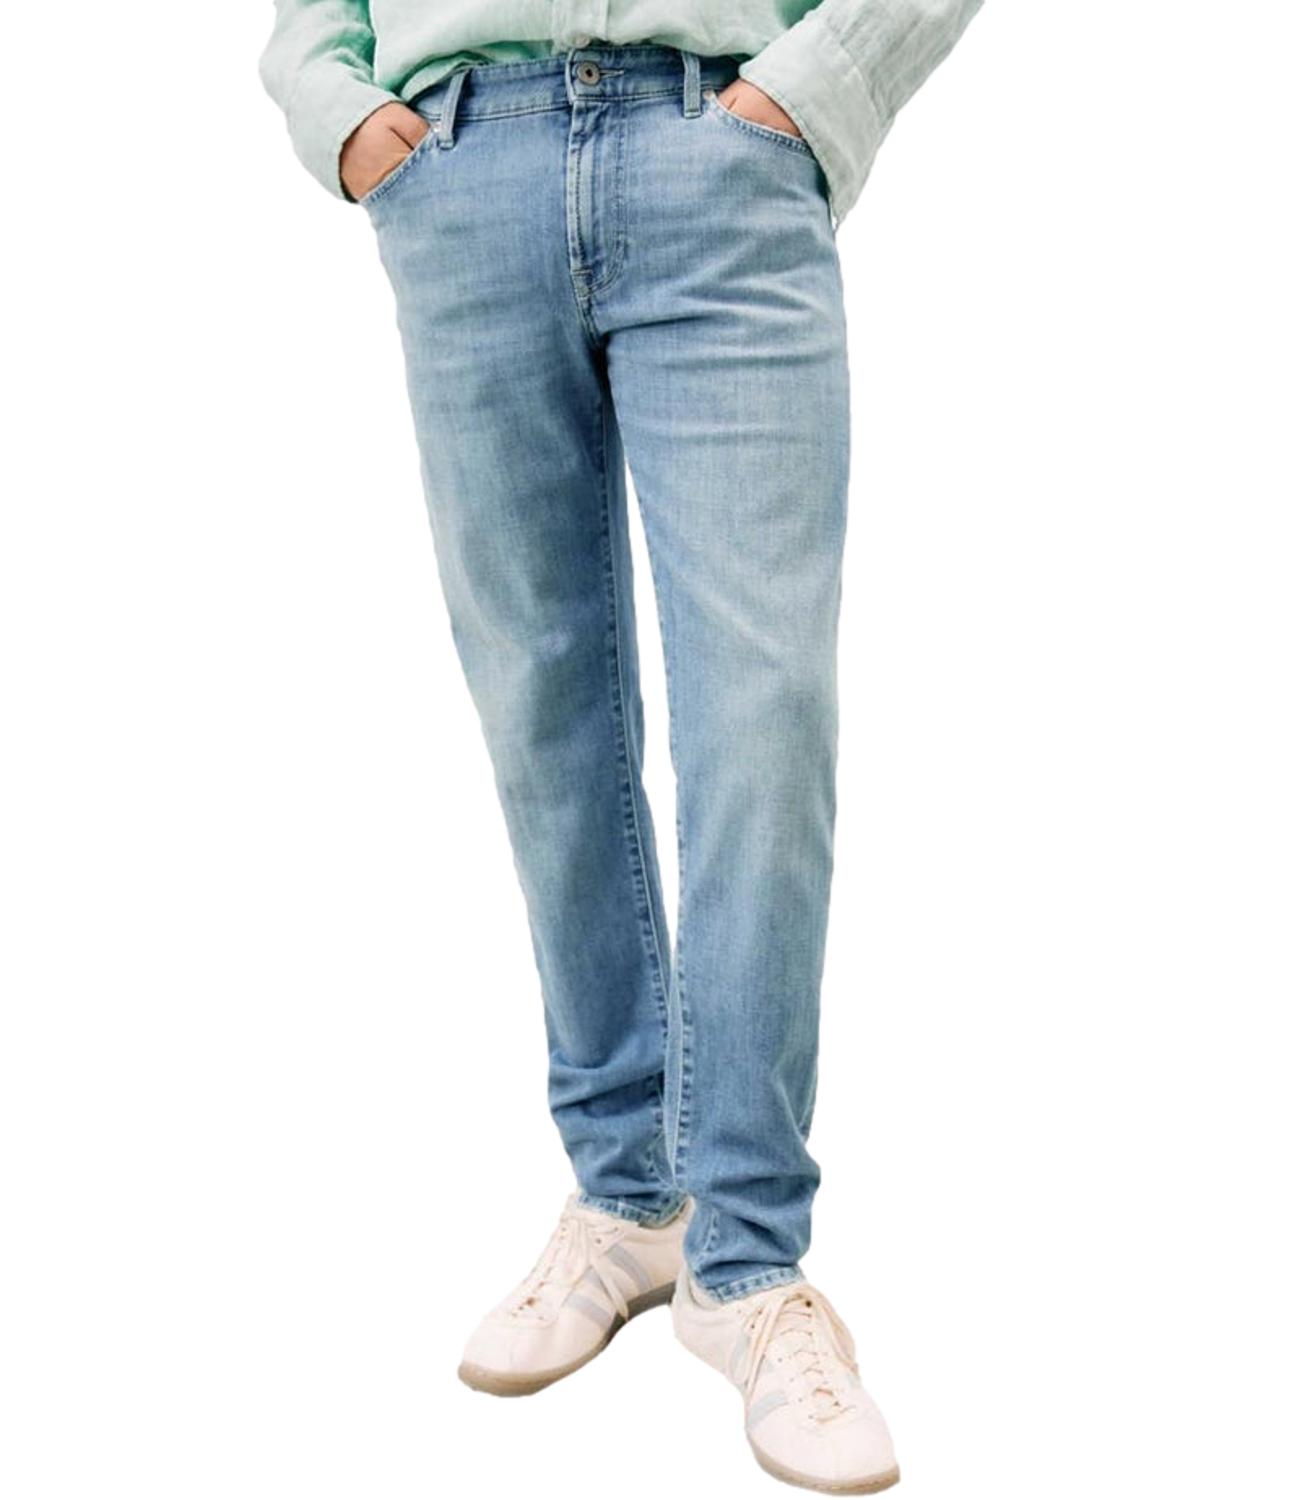 Roy Rogers Jeans 517 penelope